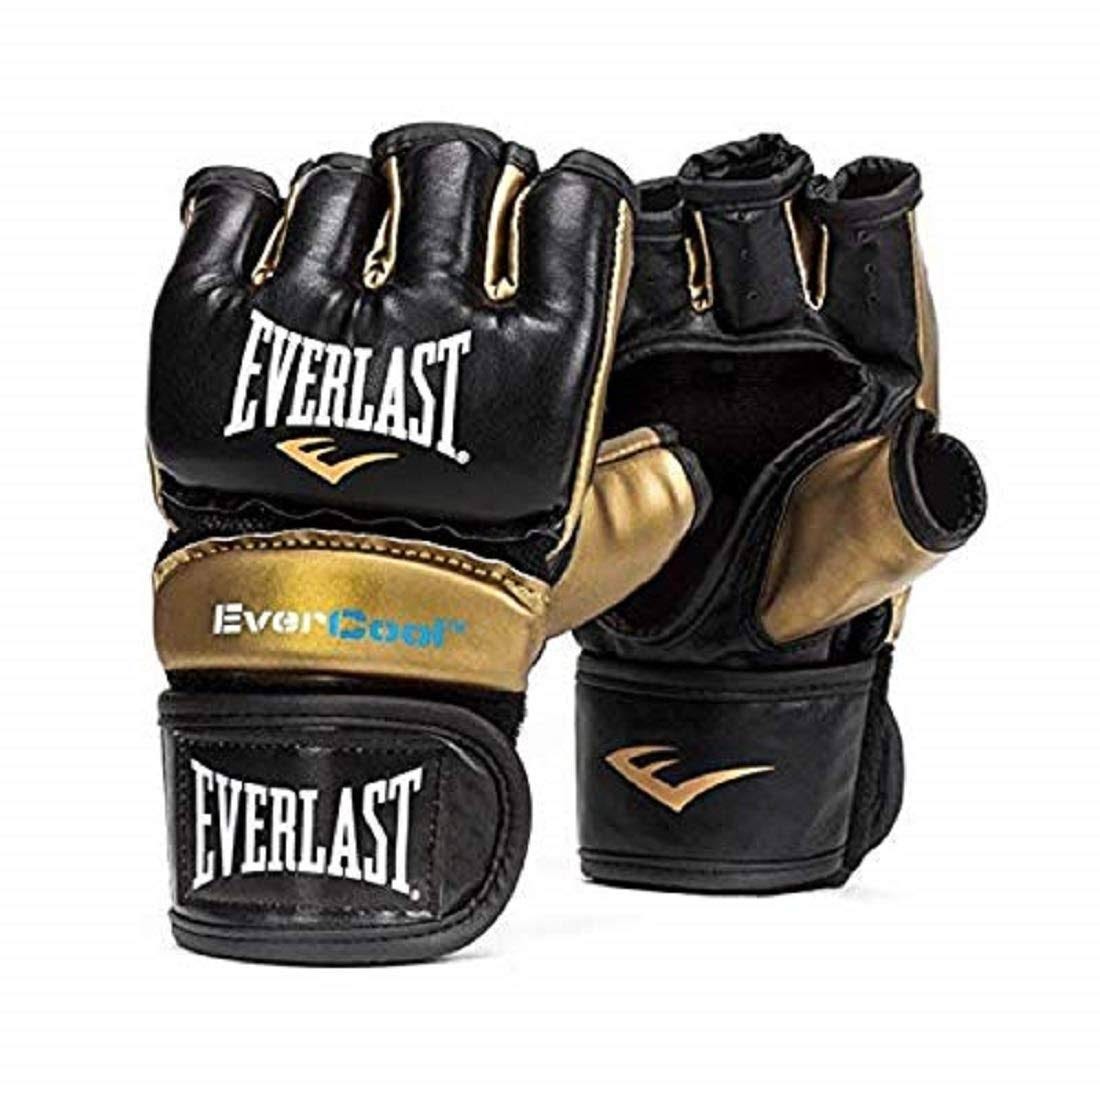 Everlast Everstrike Training Gloves: Versatile for Boxing, MMA and General Fitness | Image